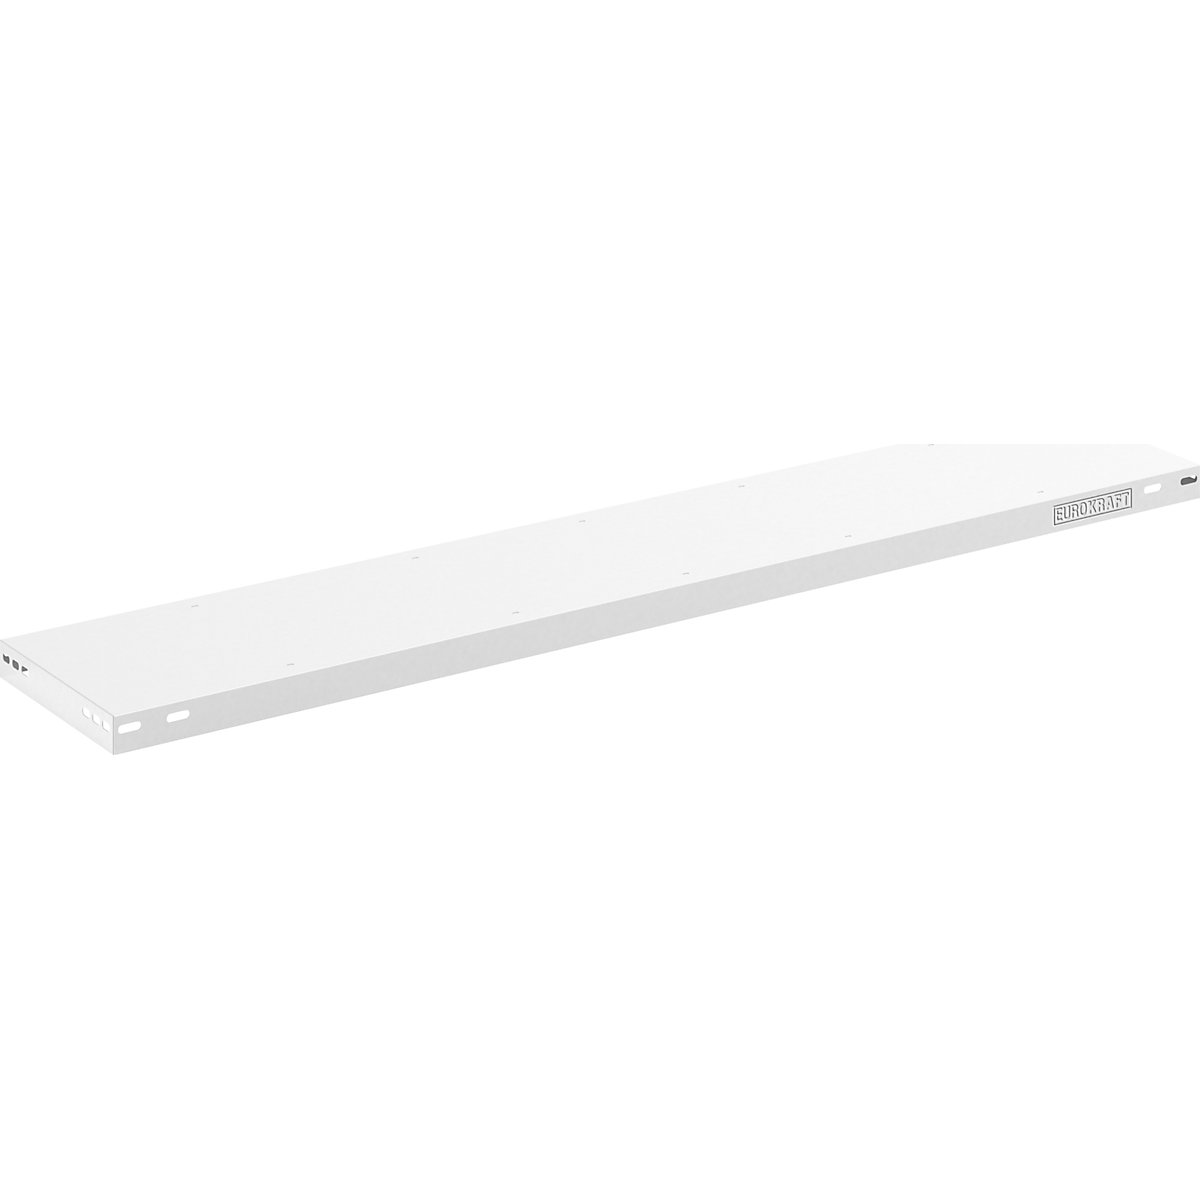 Shelf – eurokraft pro, light grey, medium duty, WxD 1300 x 300 mm